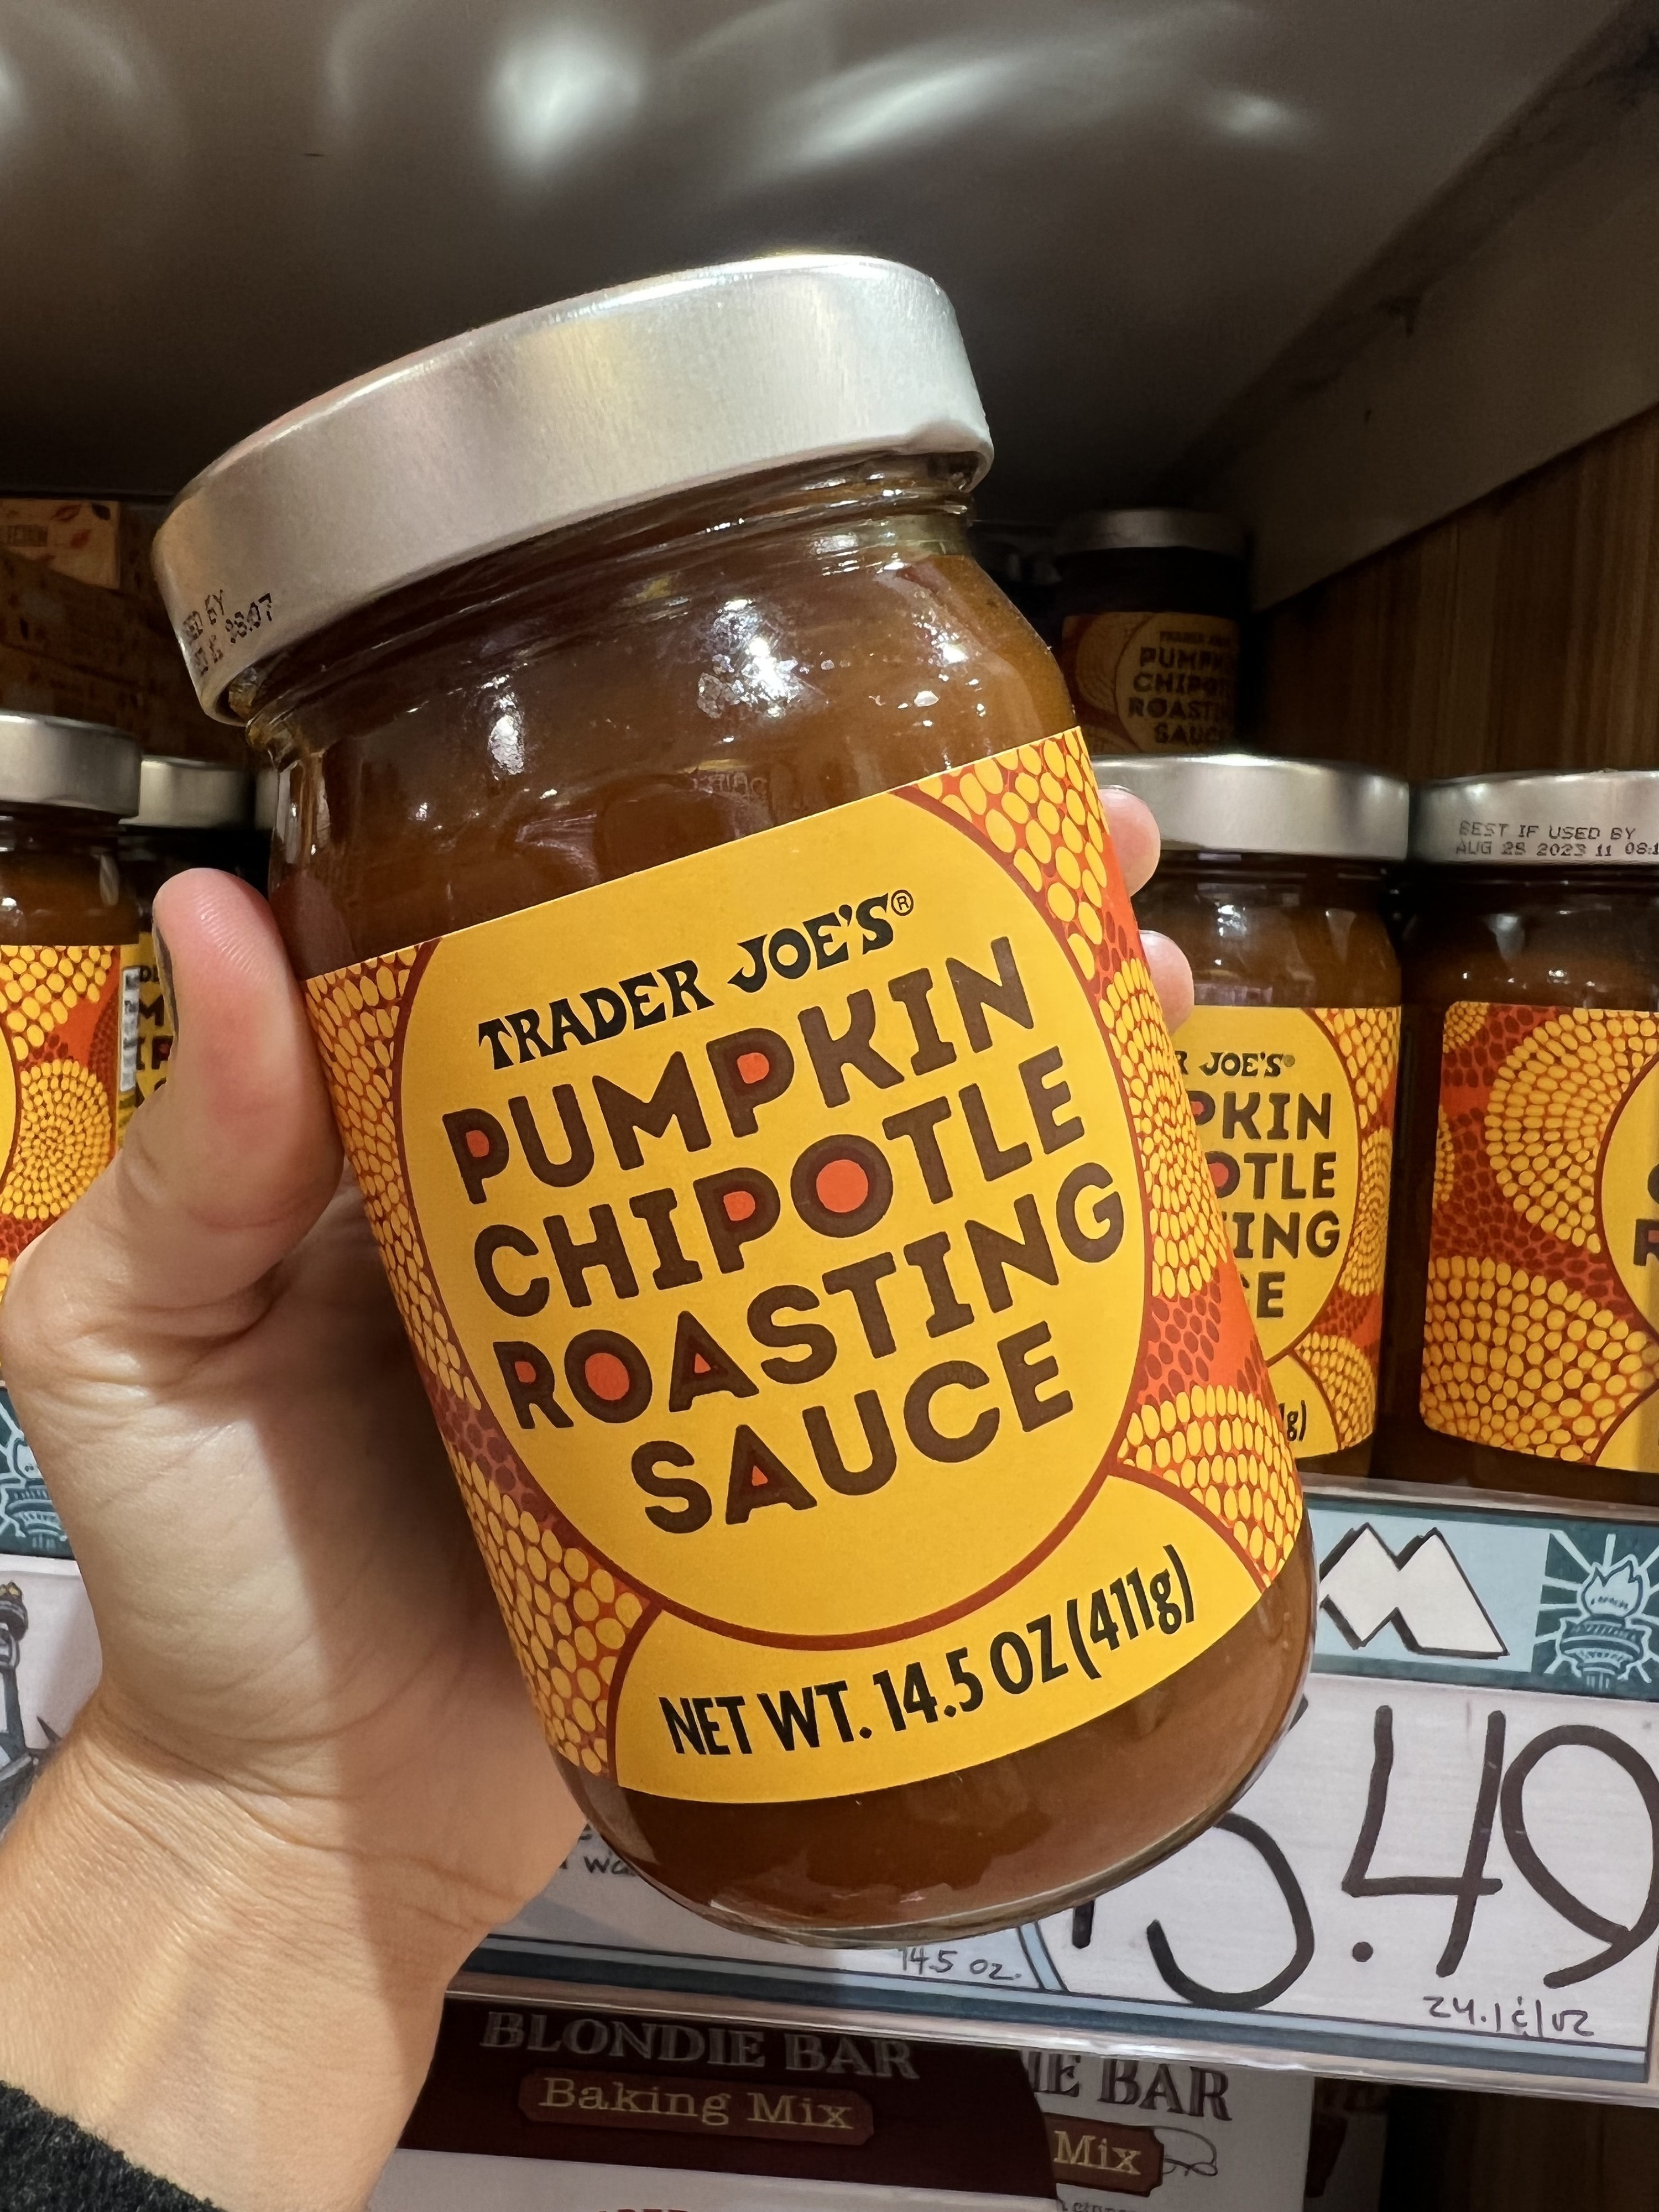 Pumpkin Chipotle Roasting Sauce